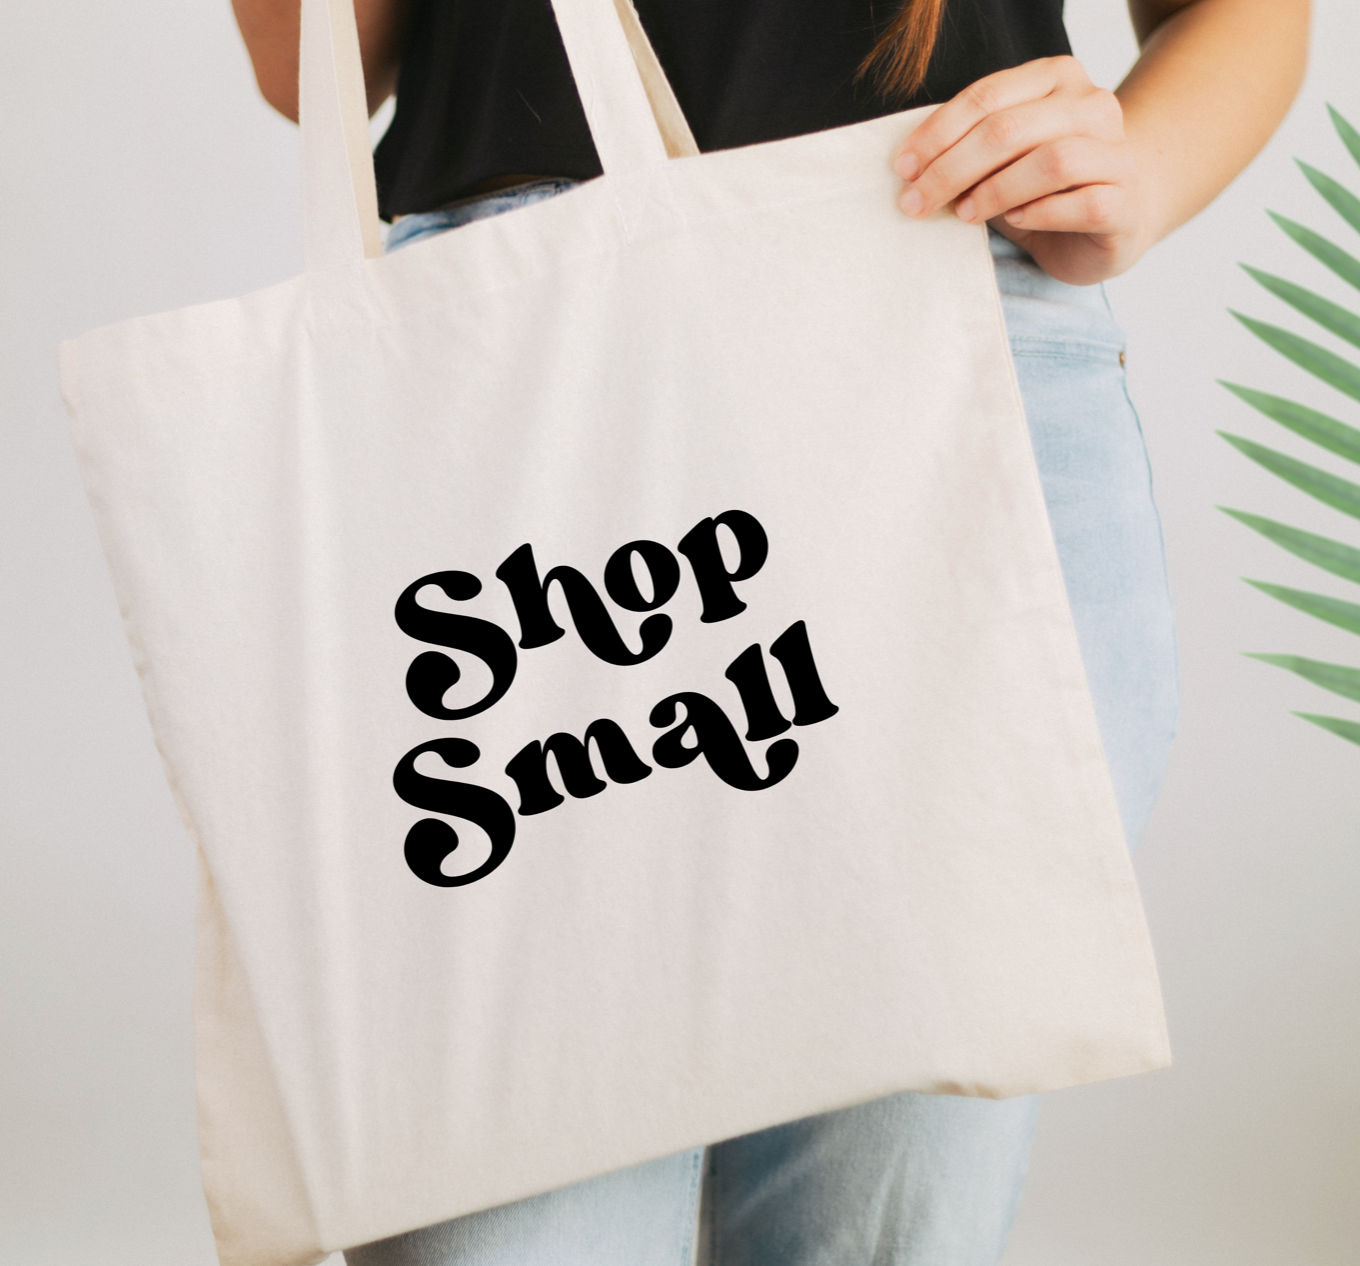 Shop Small Reusable Bag